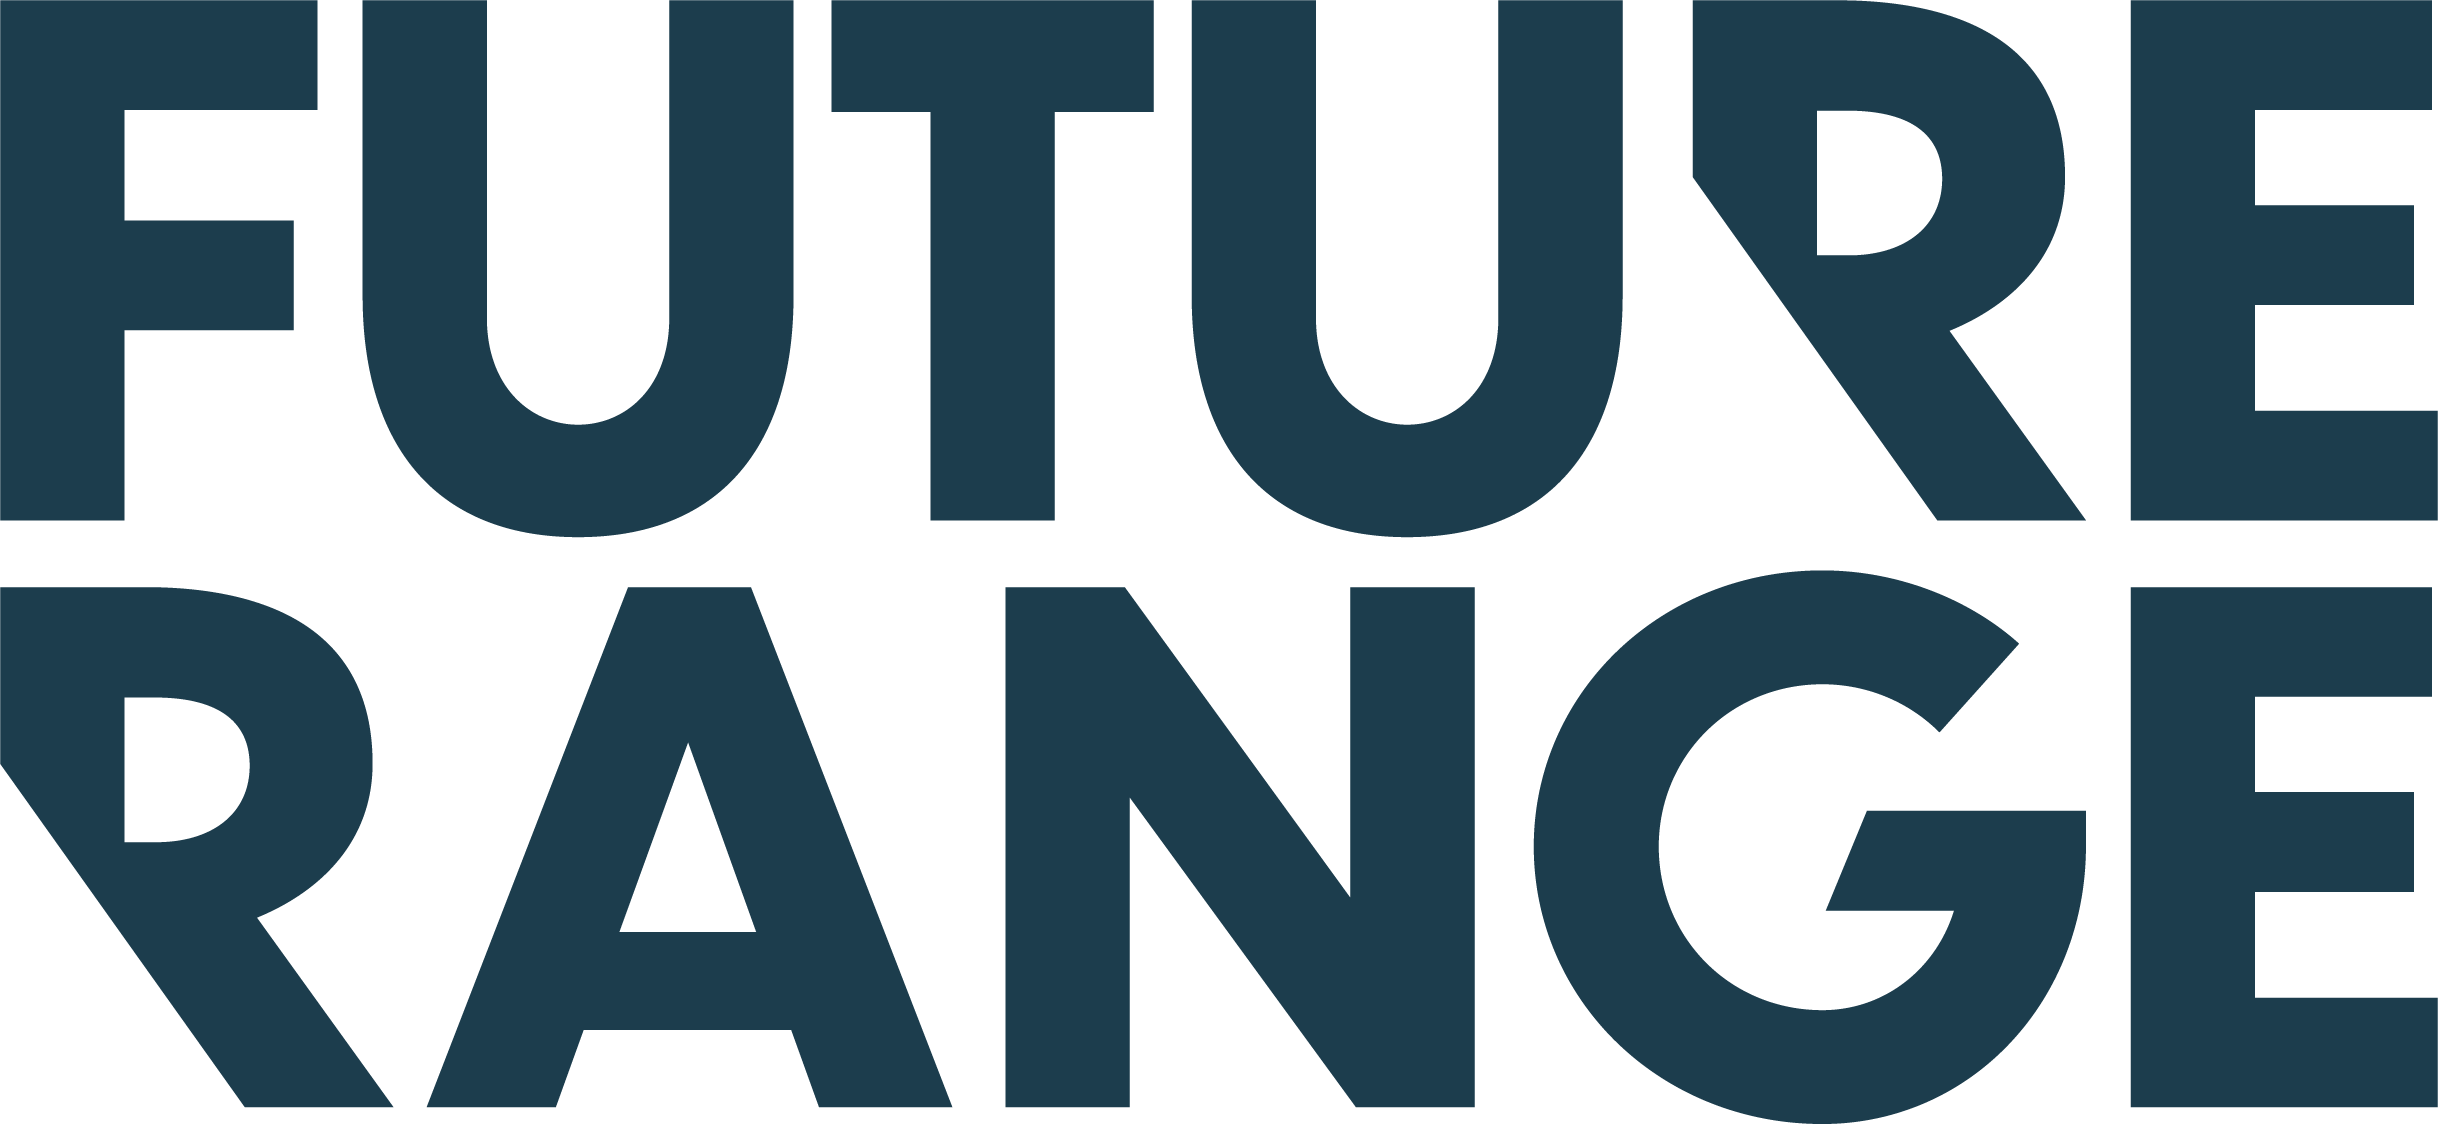 Future Range logo